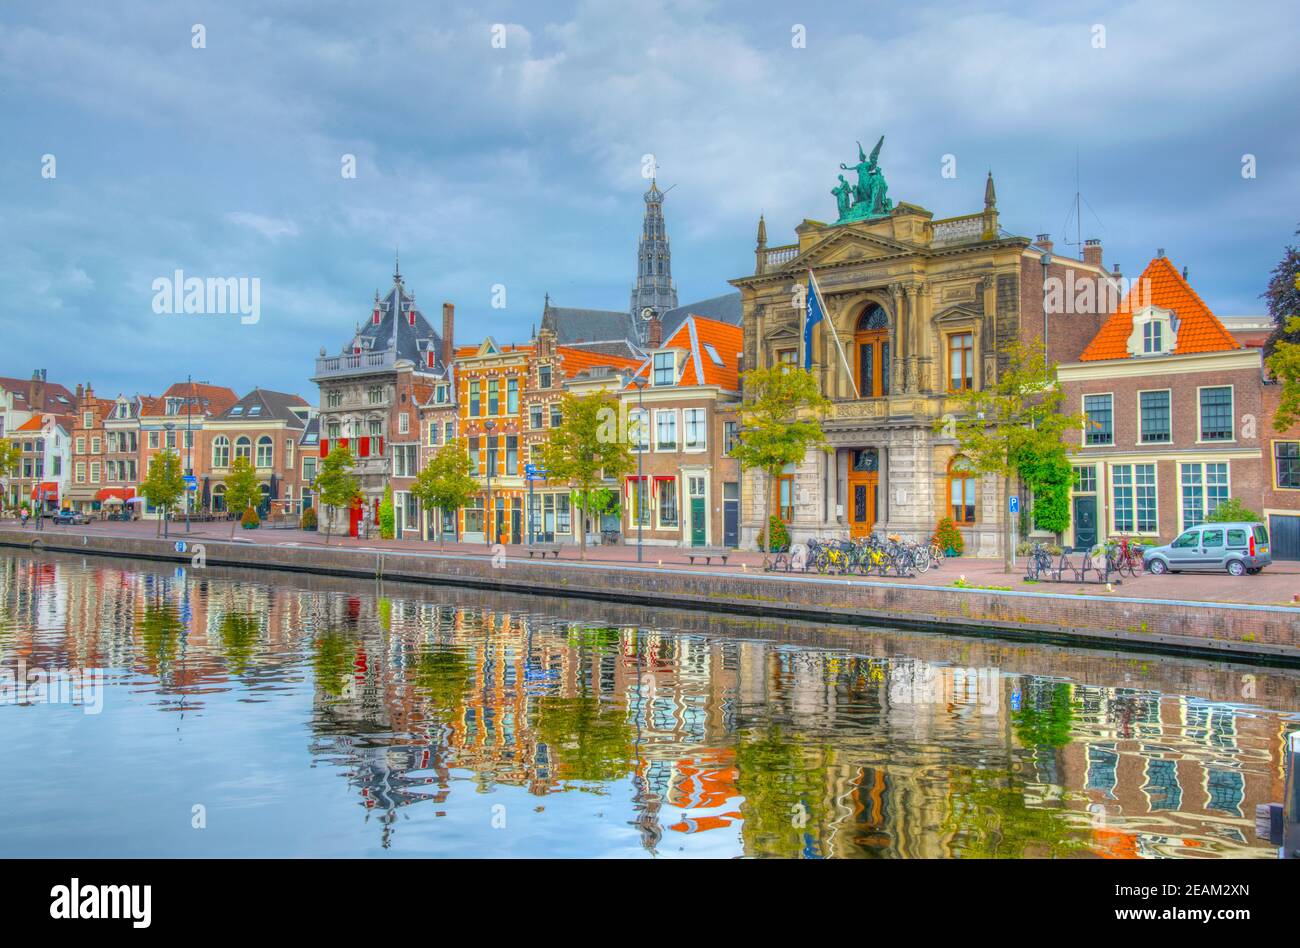 Teylers Museum situato vicino ad un canale nella città olandese di Haarlem, Paesi Bassi Foto Stock